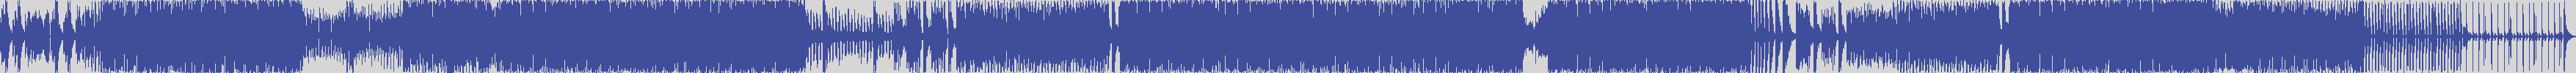 definitiva [DEF003] Dj Bum Bum - Tekno Flamenko [Alternative Tablao] audio wave form